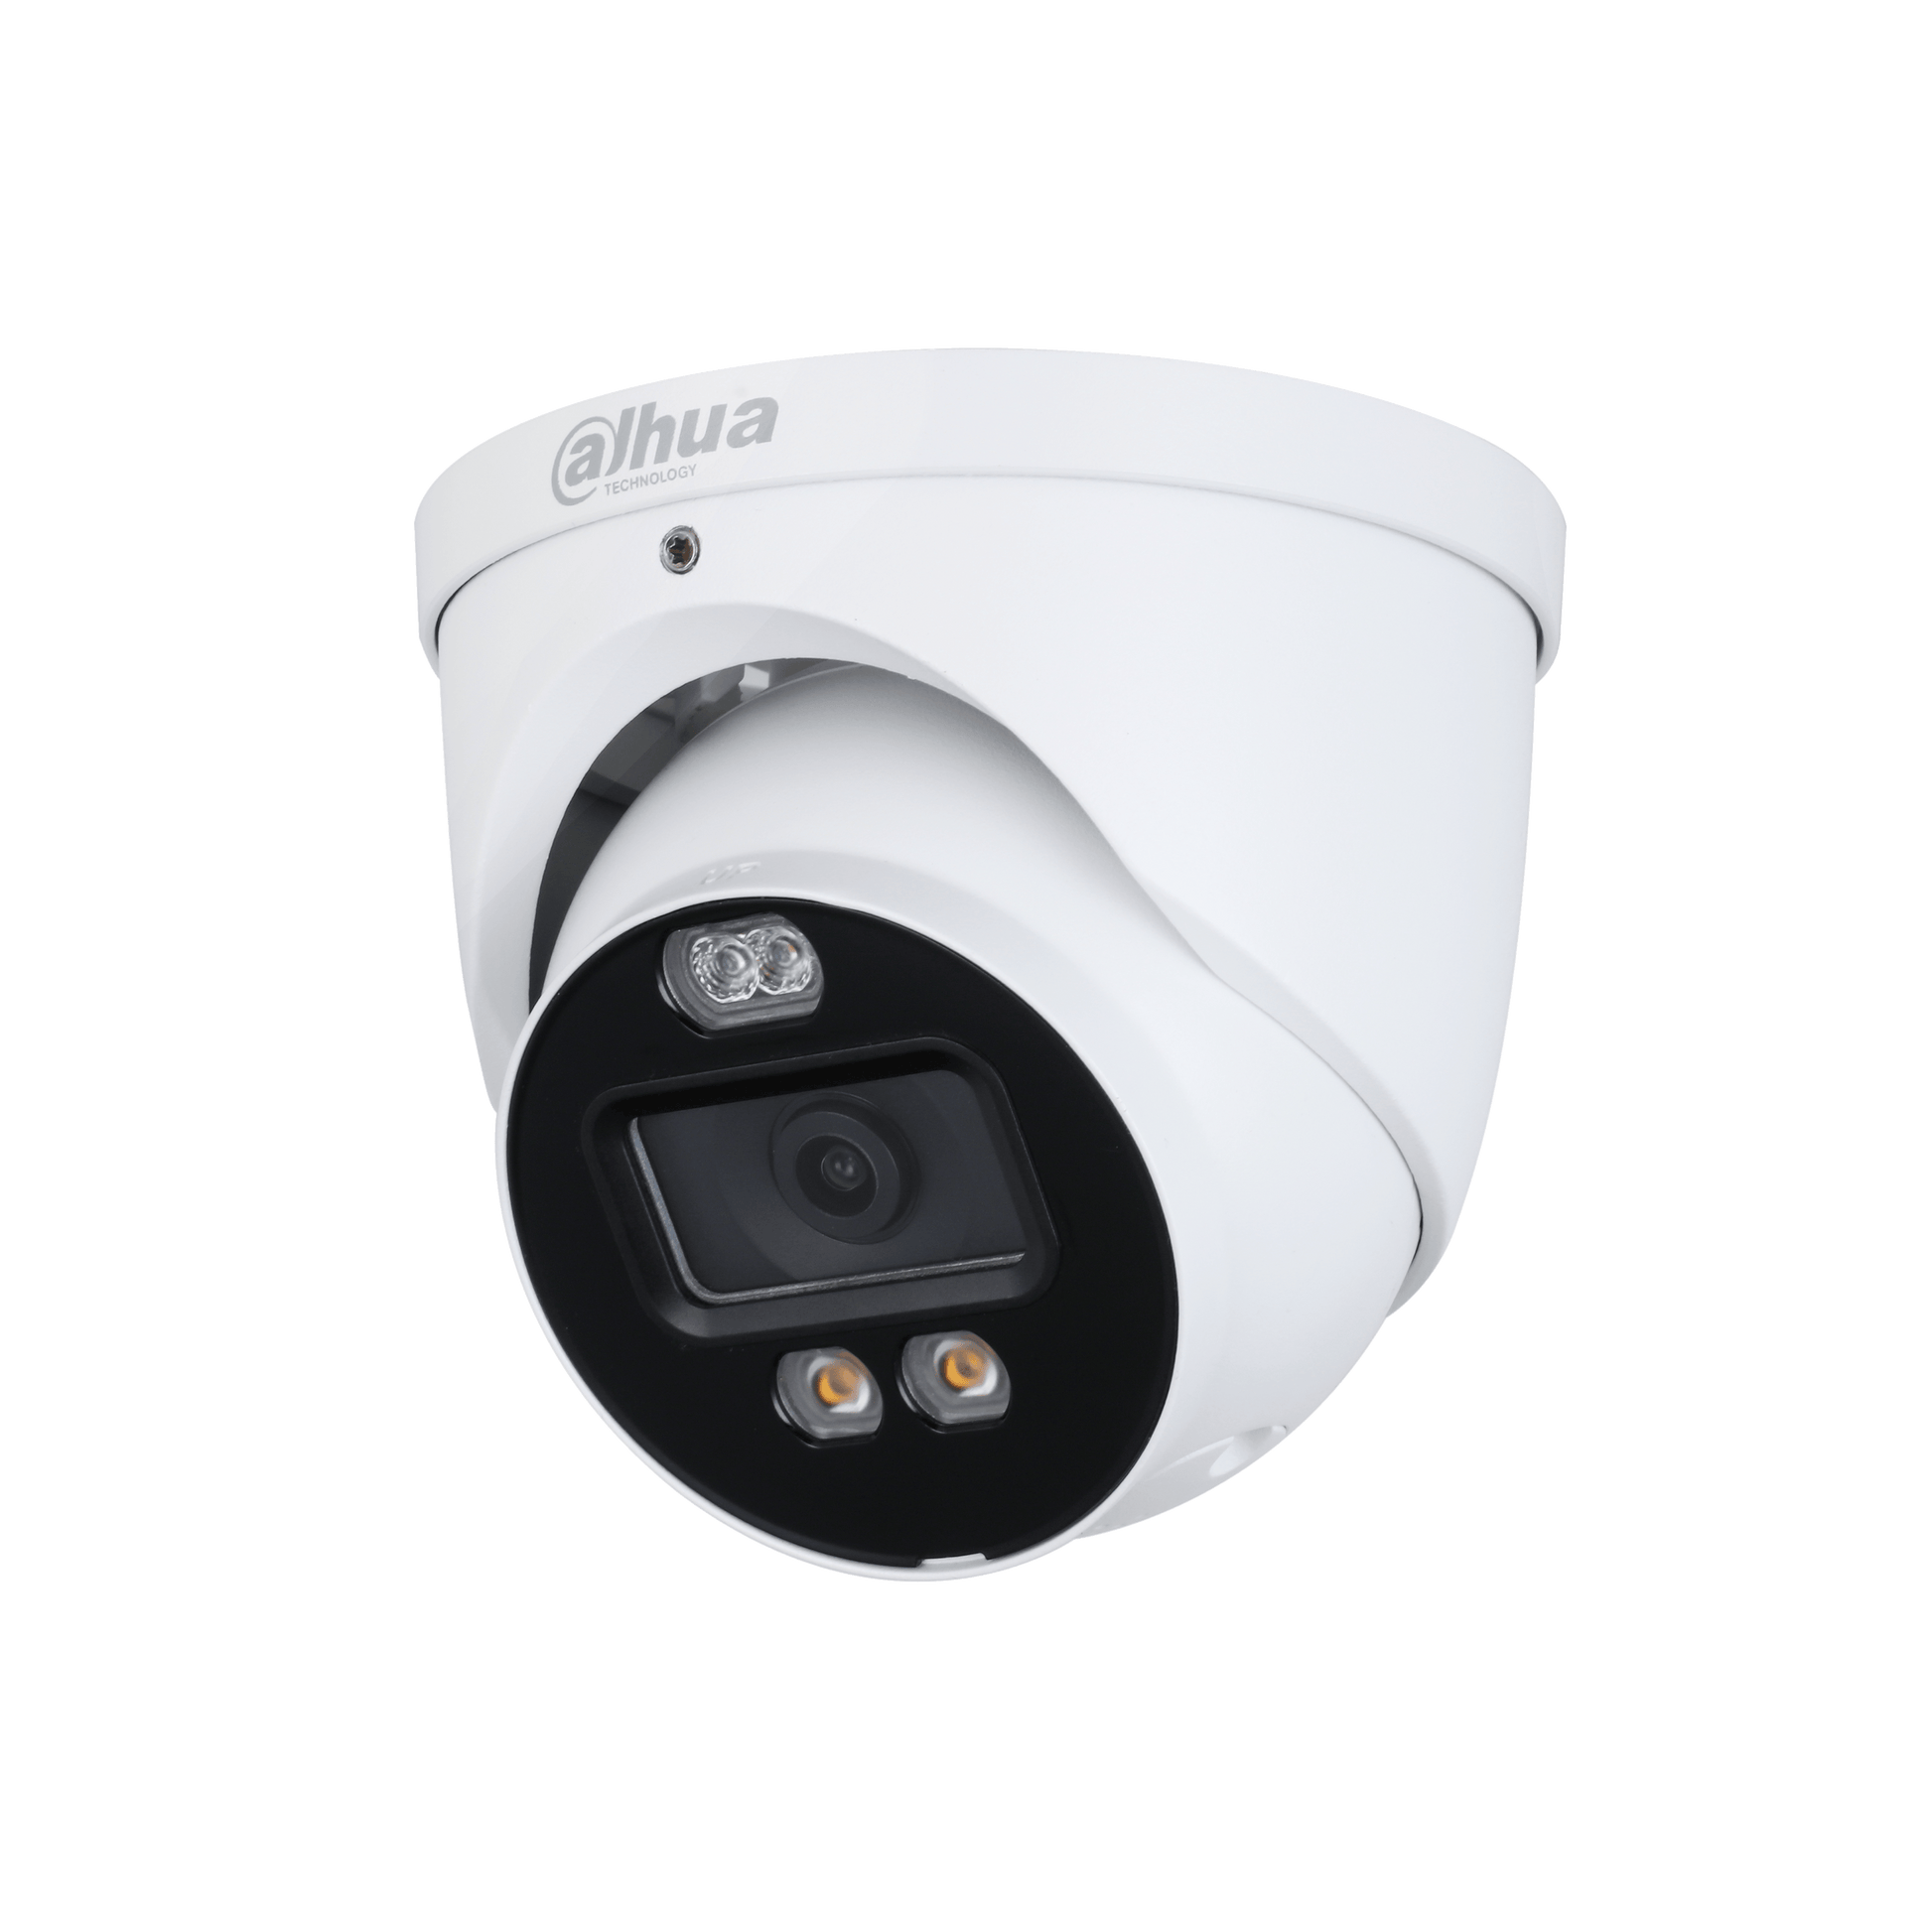 8MP Dahua DH-HAC-ME1809HP-A-PV 8MP HDCVI TiOC Active Deterrence HDoC Fixed Lens Eyeball Turret Camera 2.8MM White - CCTV Express UK